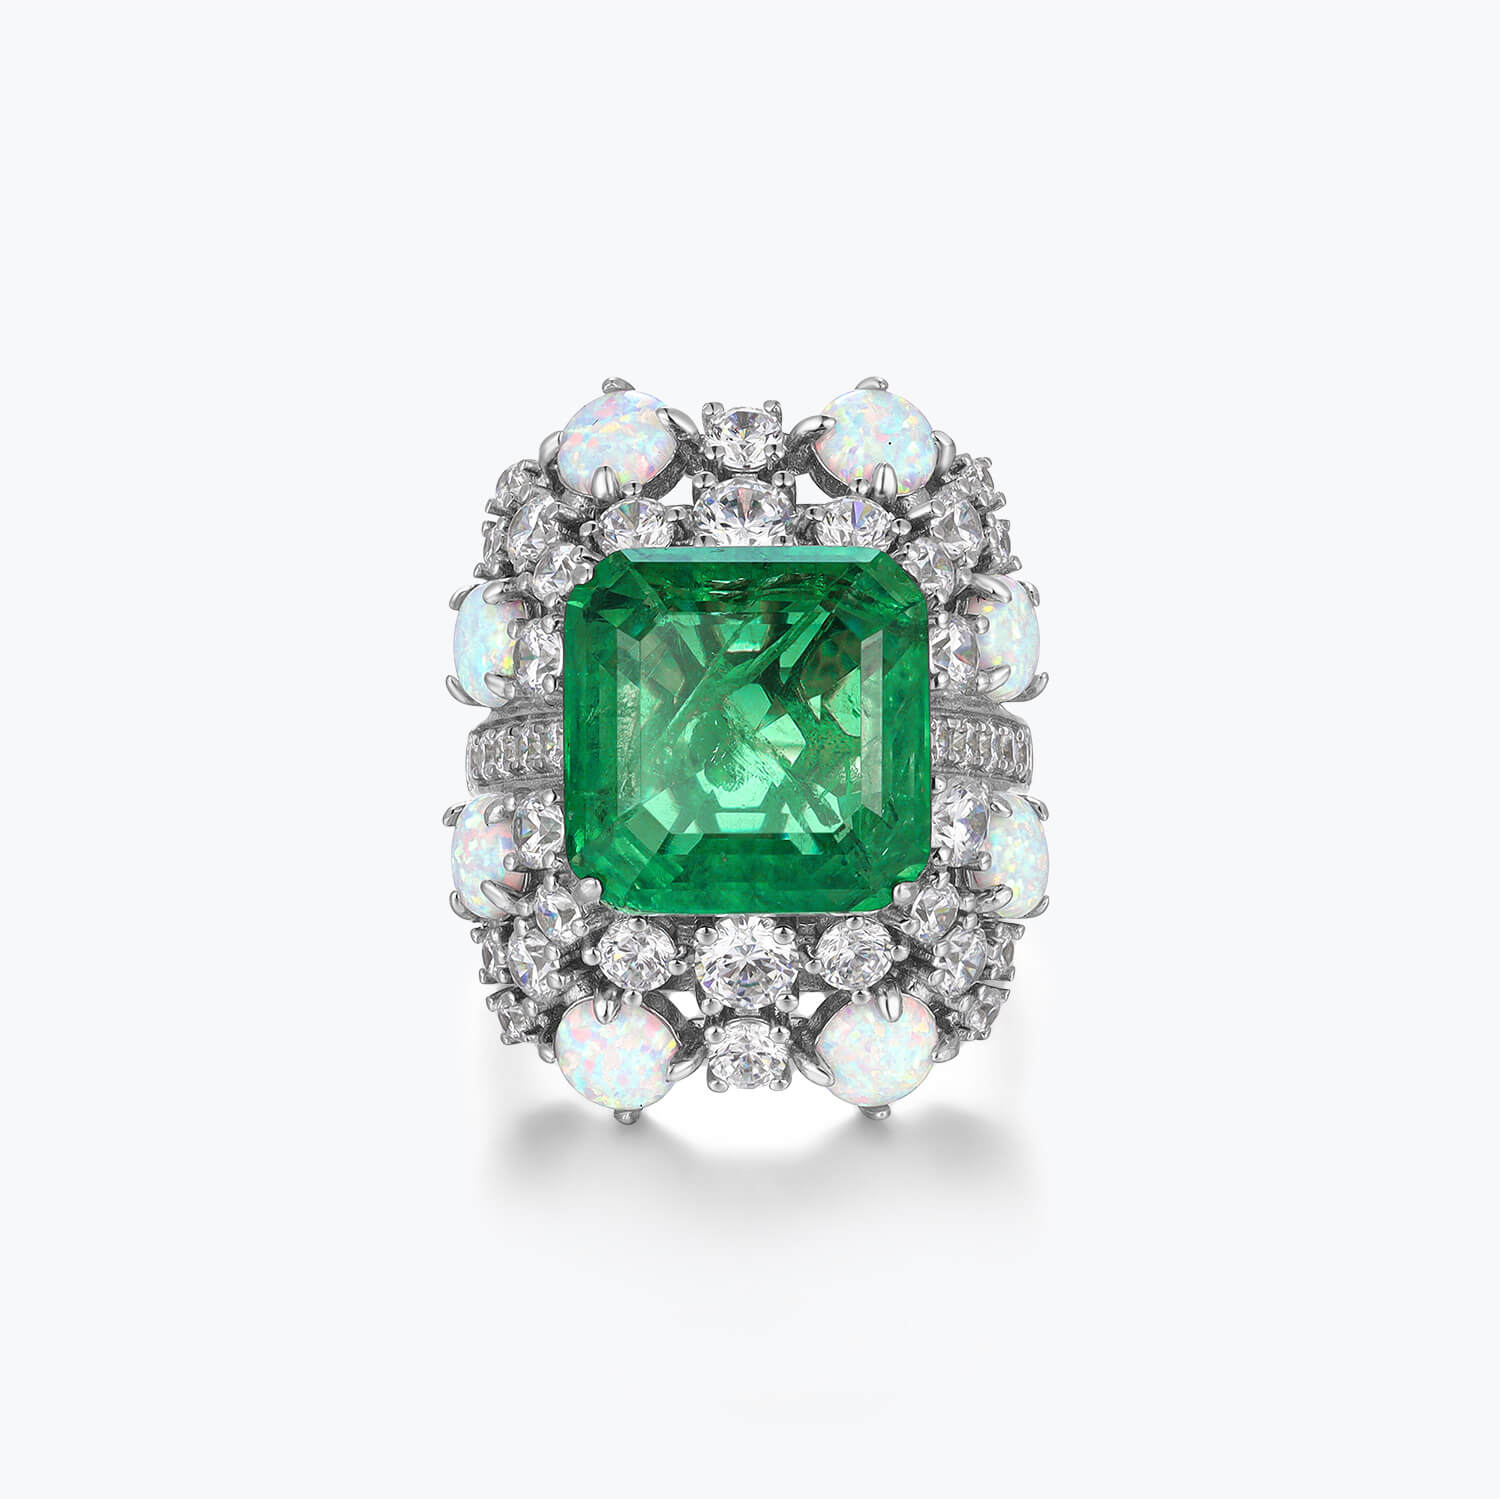 Dissoo® Opal Drop & Emerald Luxury Cocktail Ring